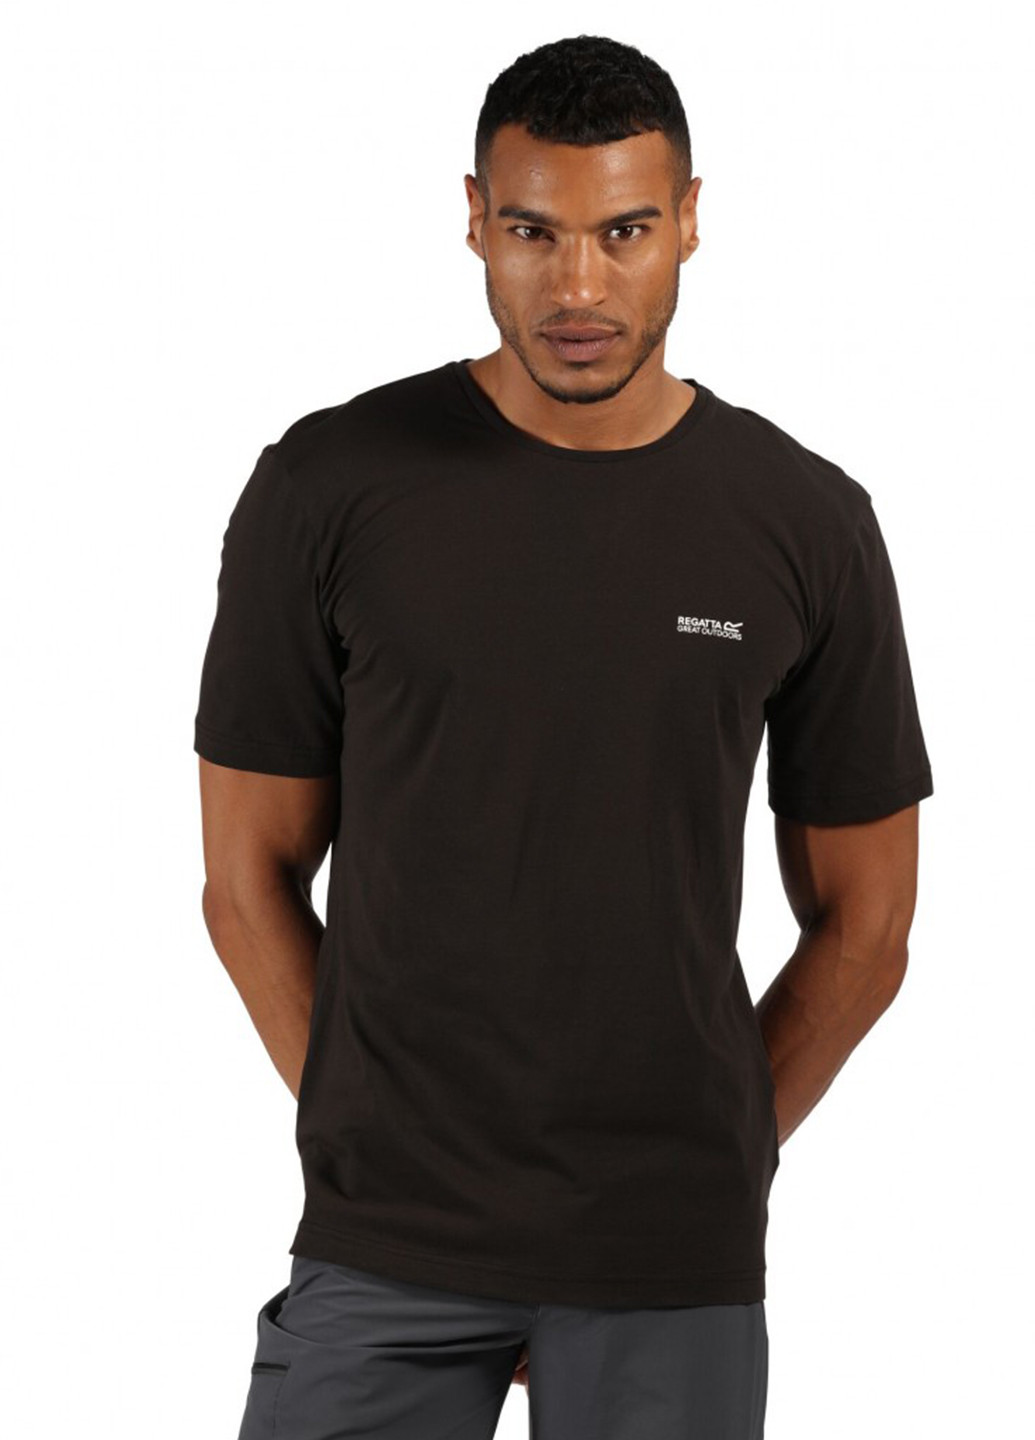 Черная футболка Regatta RMT218-800